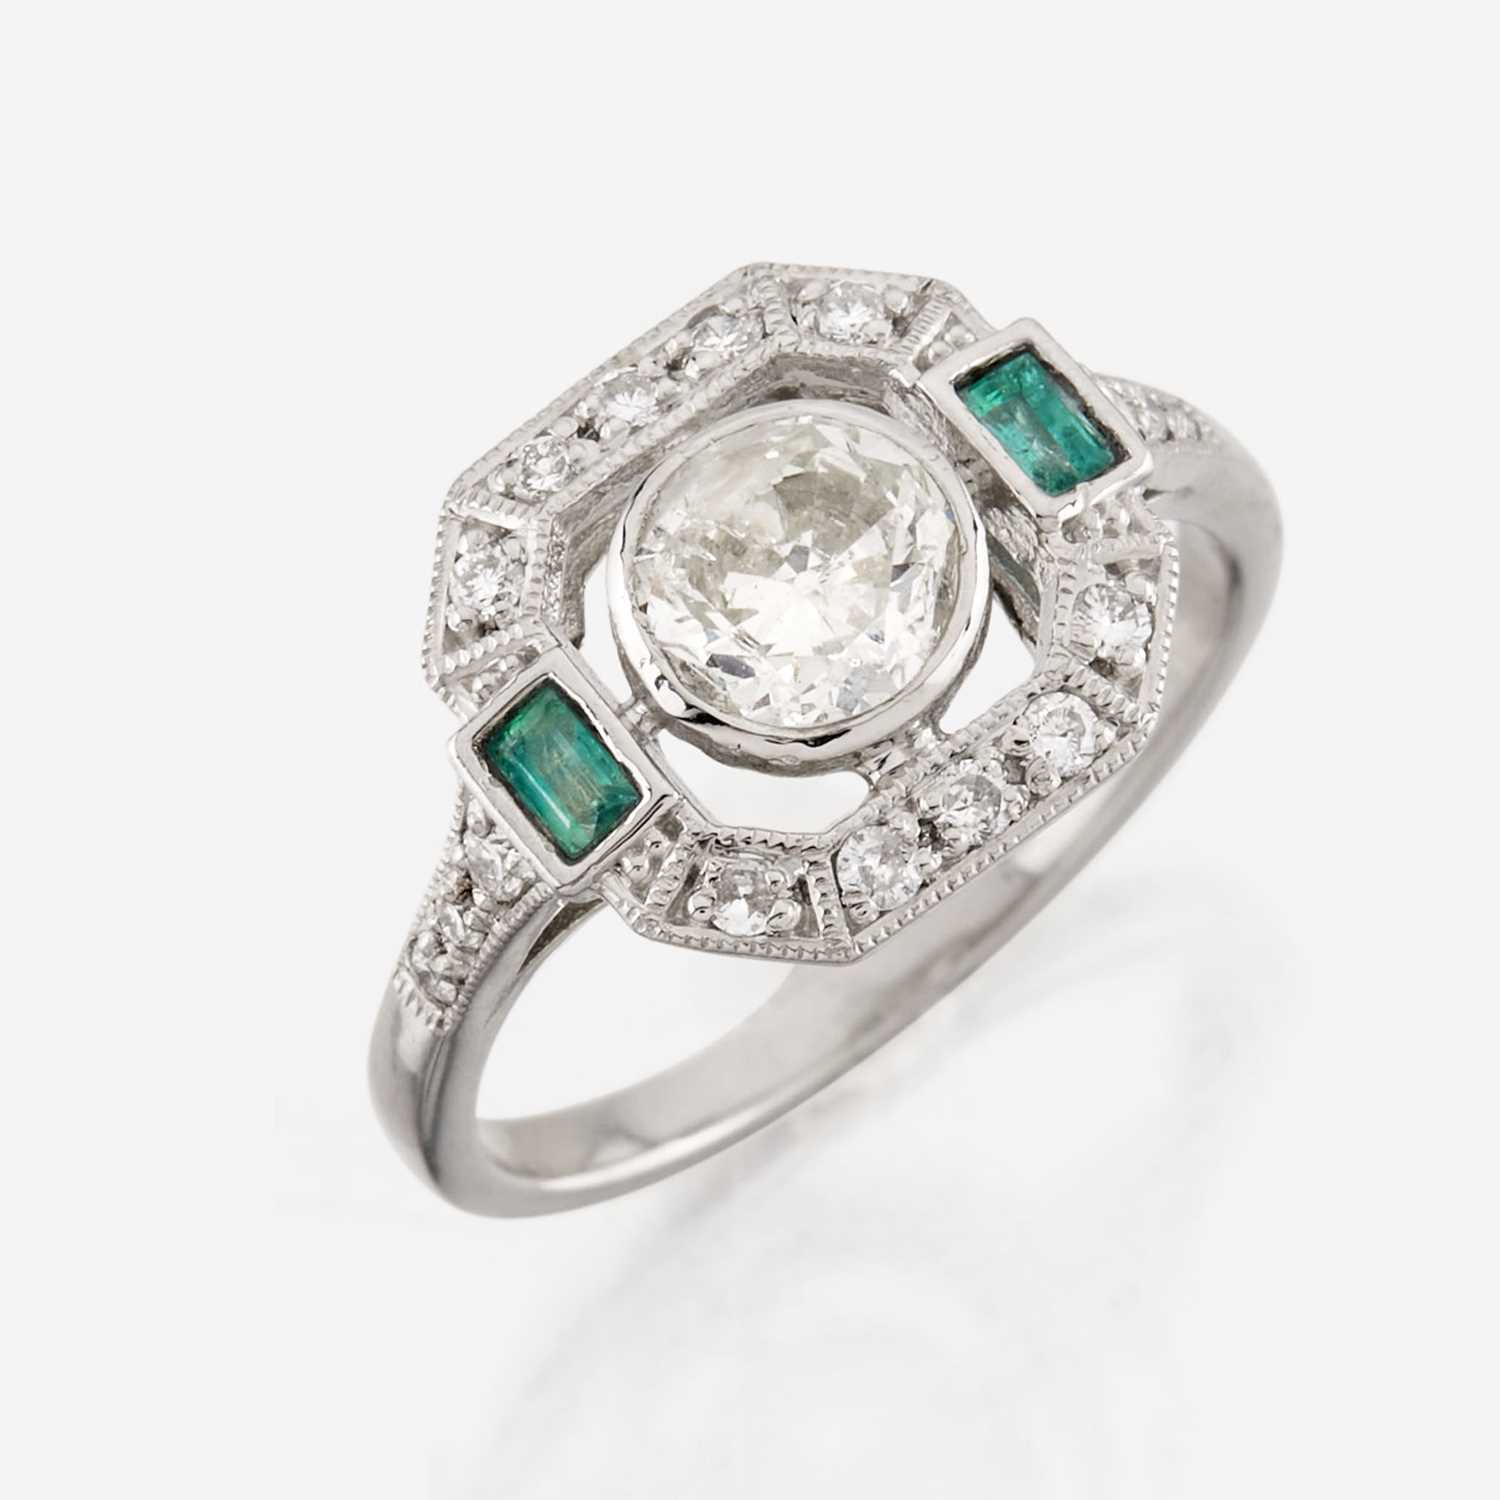 Lot 21 - A diamond, emerald, and platinum ring